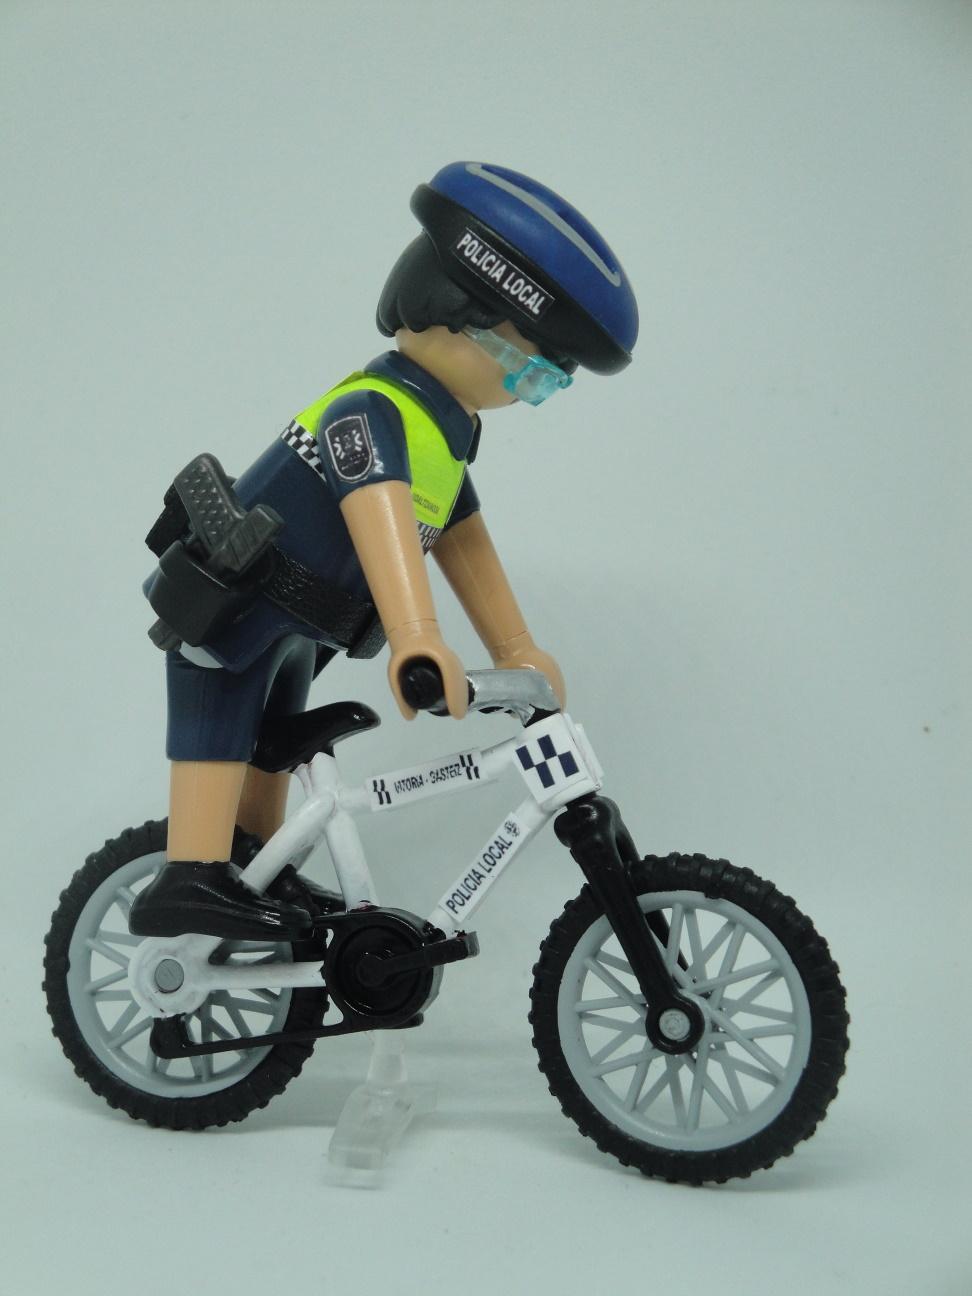 Playmobil personalizado Policía Local Vitoria Gasteiz patrulla con bicicleta elige hombre o mujer